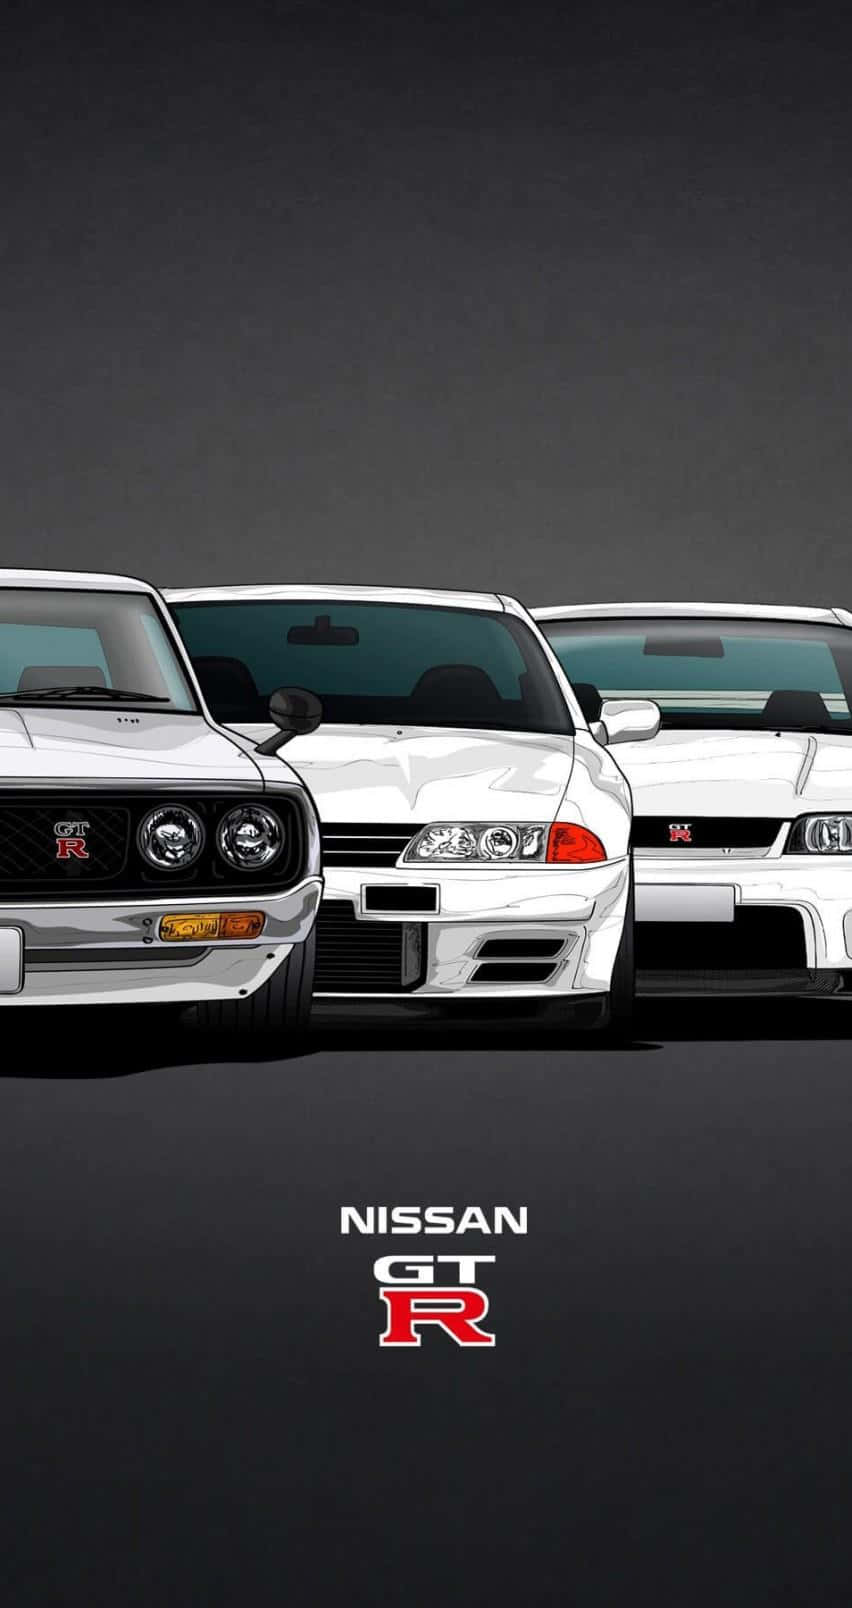 Nissan R - Gt Wallpapers Wallpaper